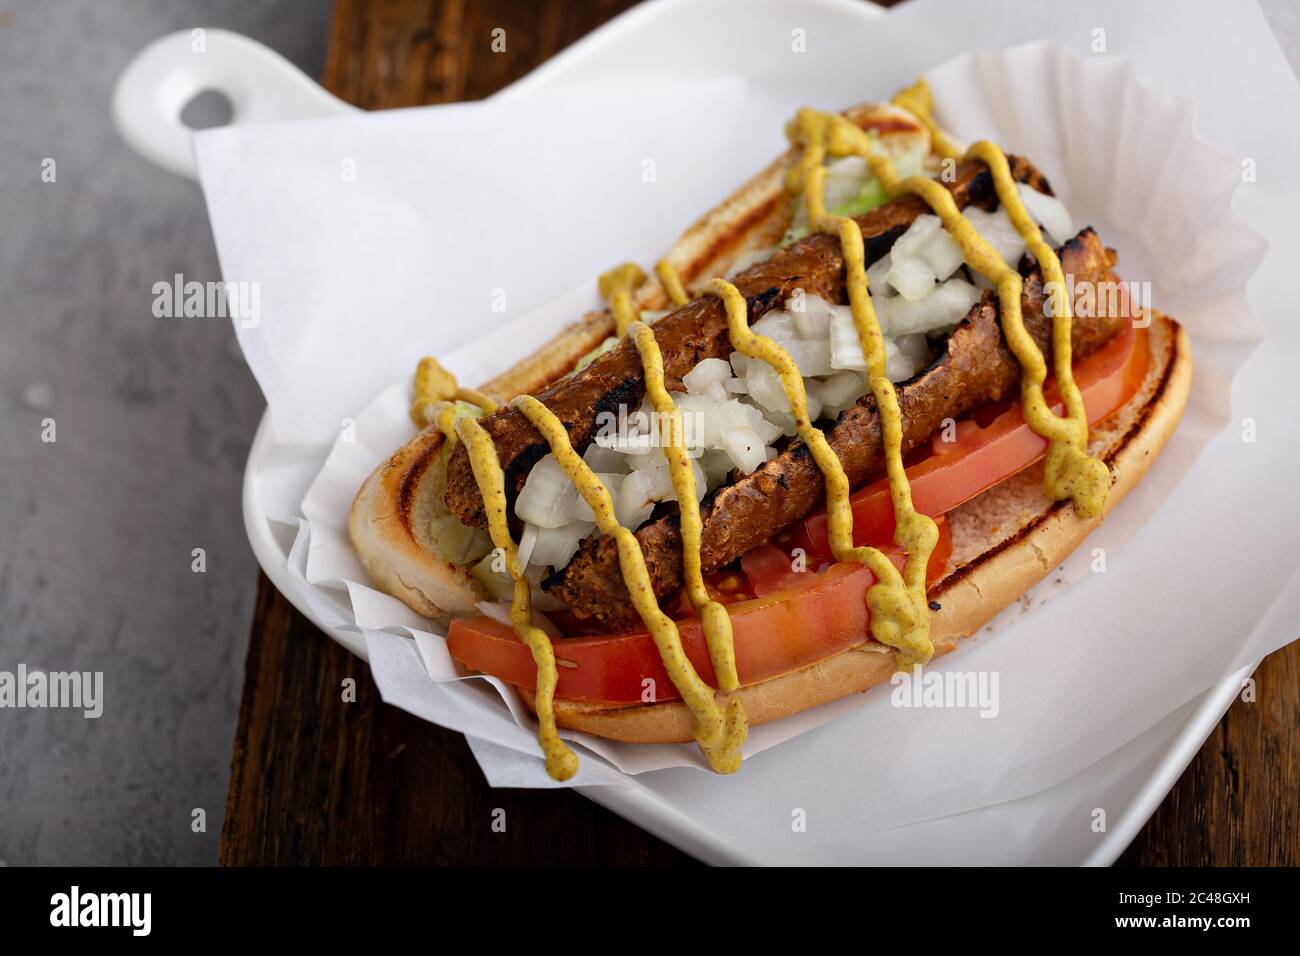 Vegan hot dog with meatless sausage Stock Photo